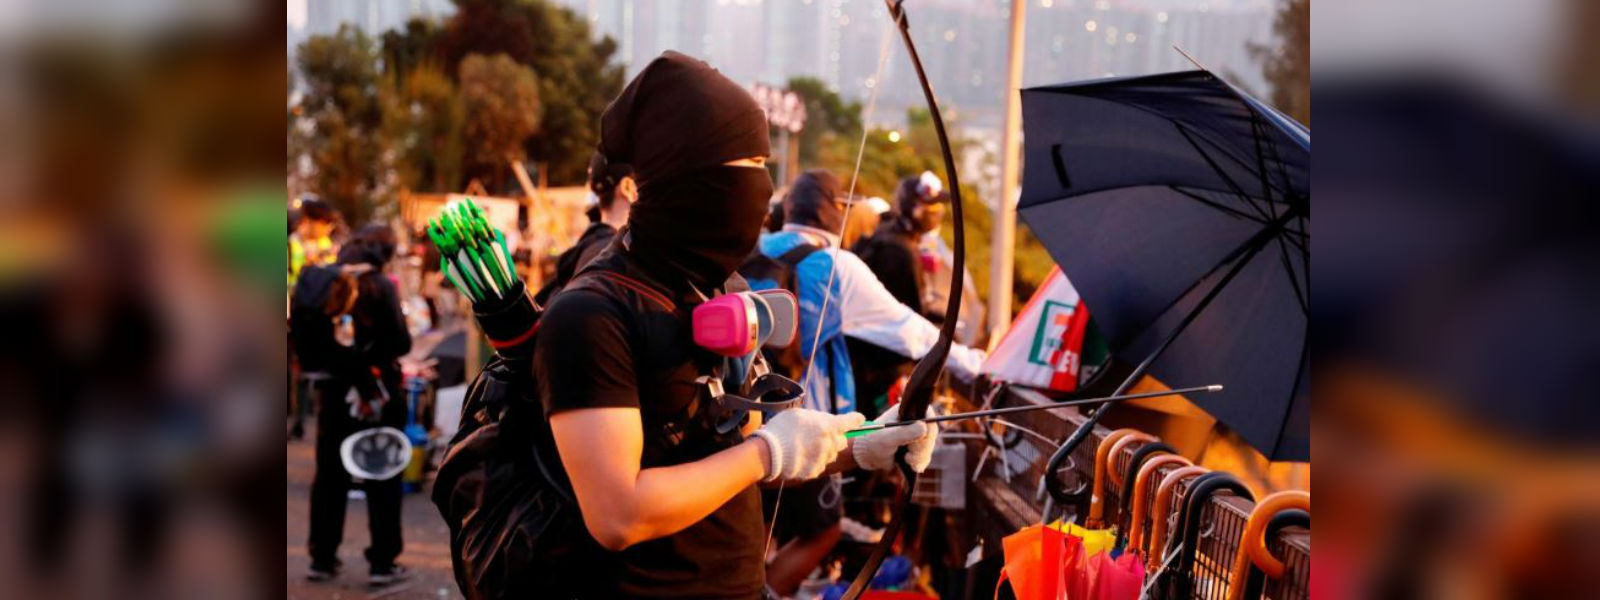 Hong Kong protests: Fire arrows and petrol bombs